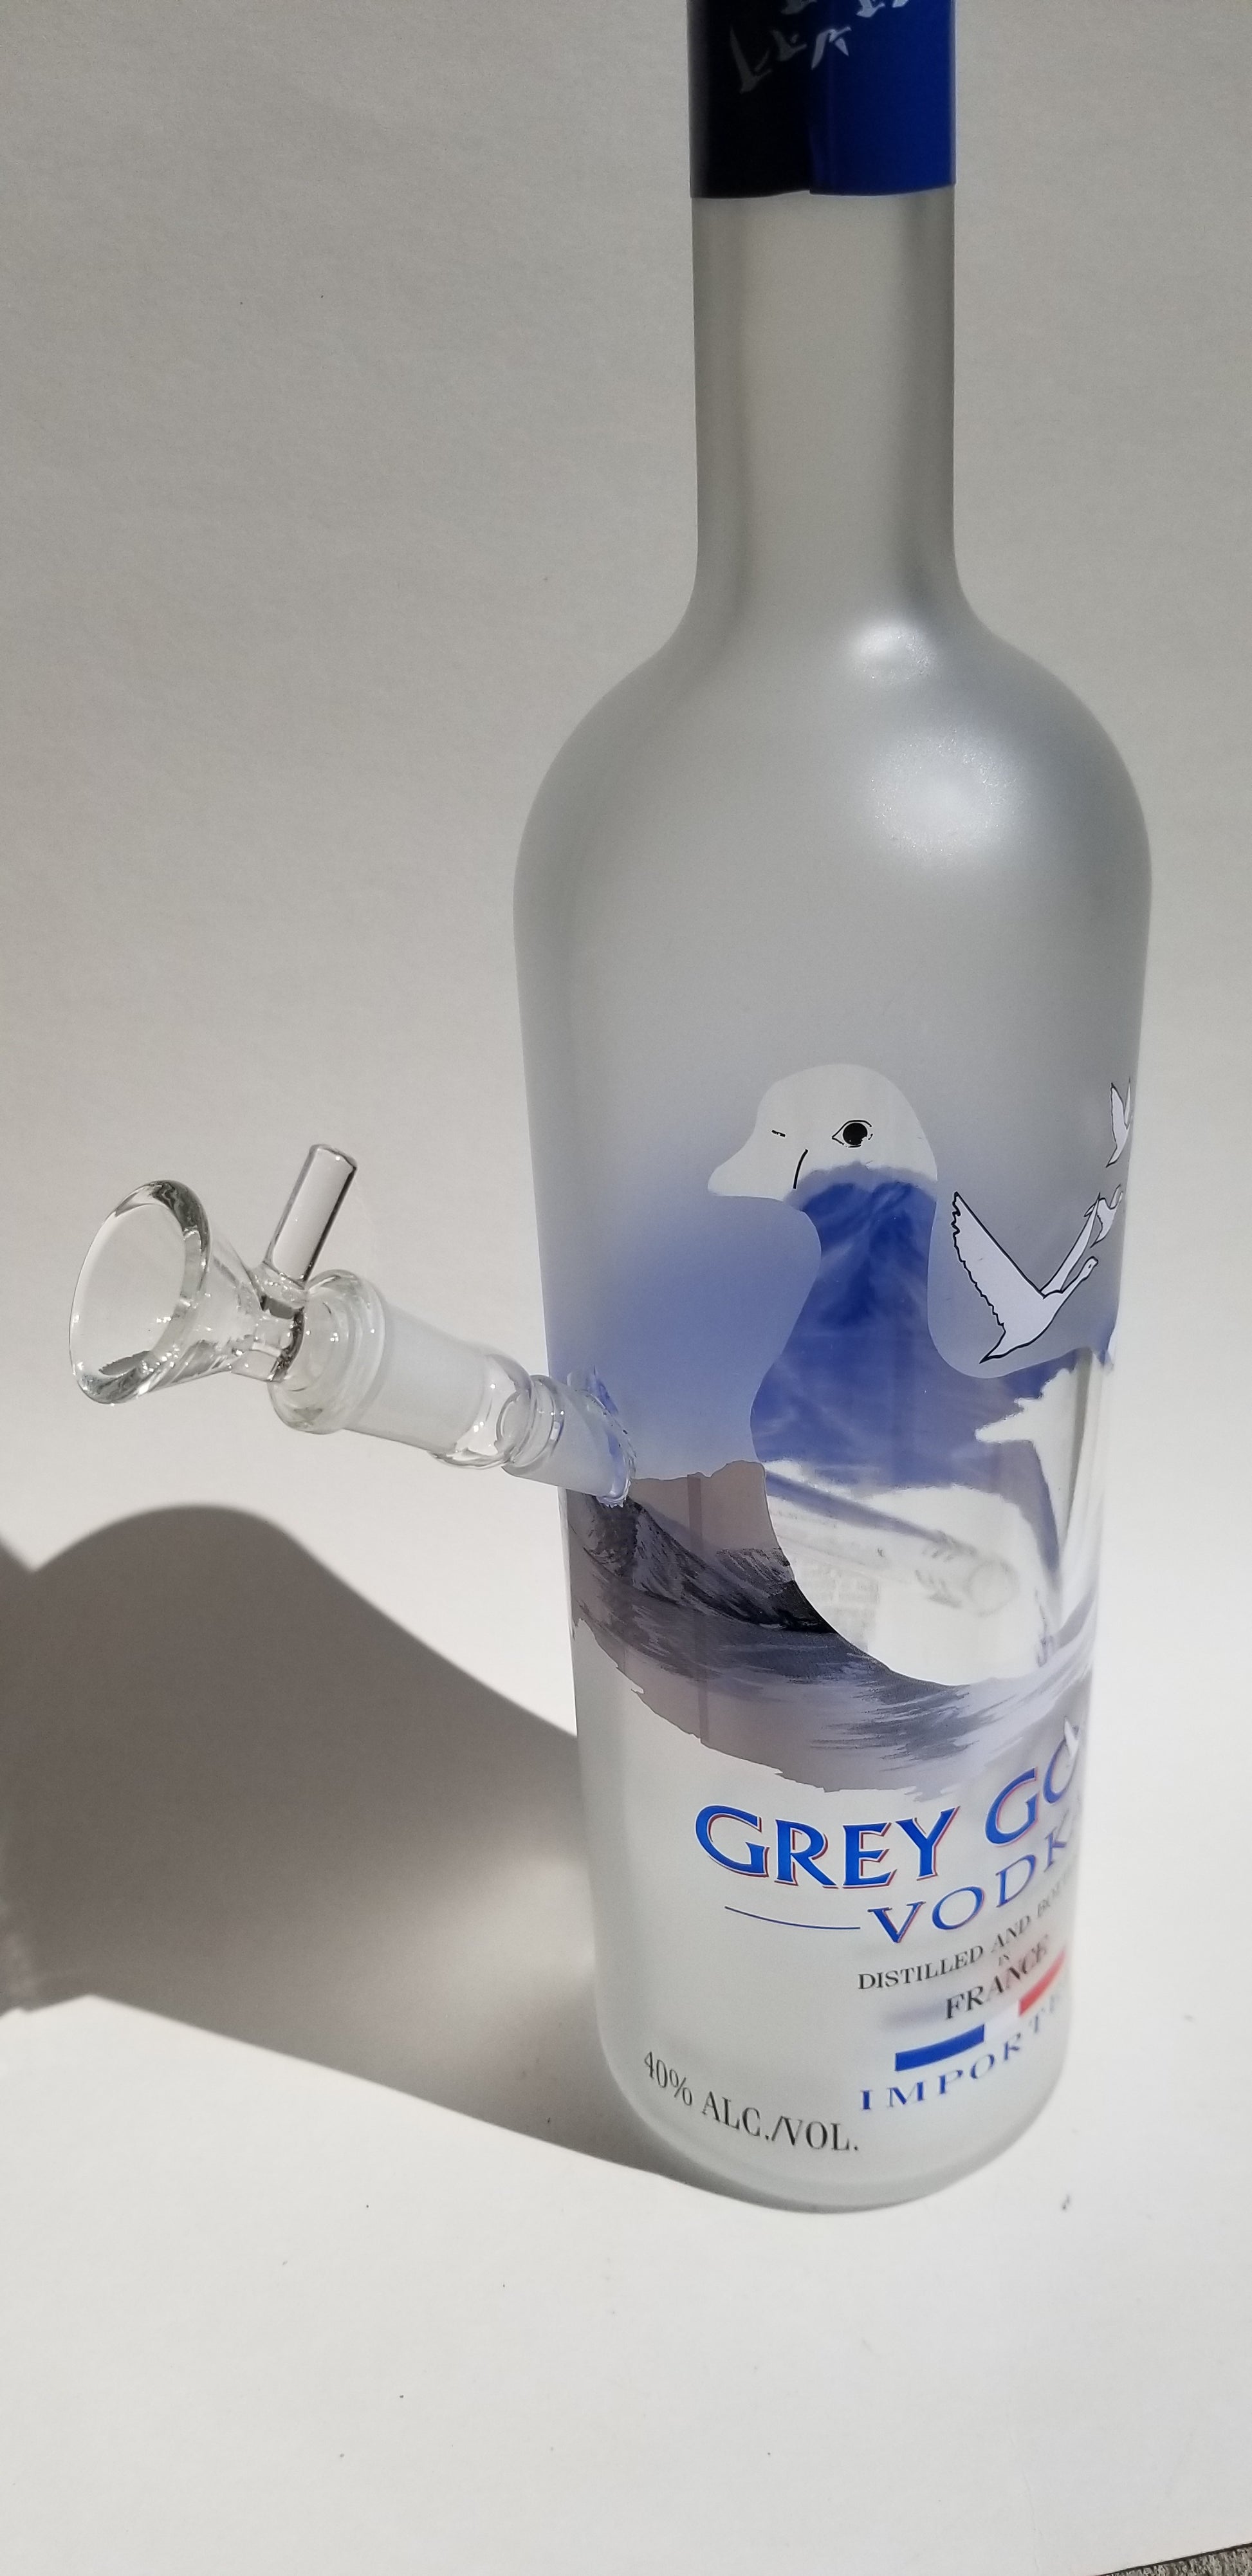 Grey Goose Glass Piece